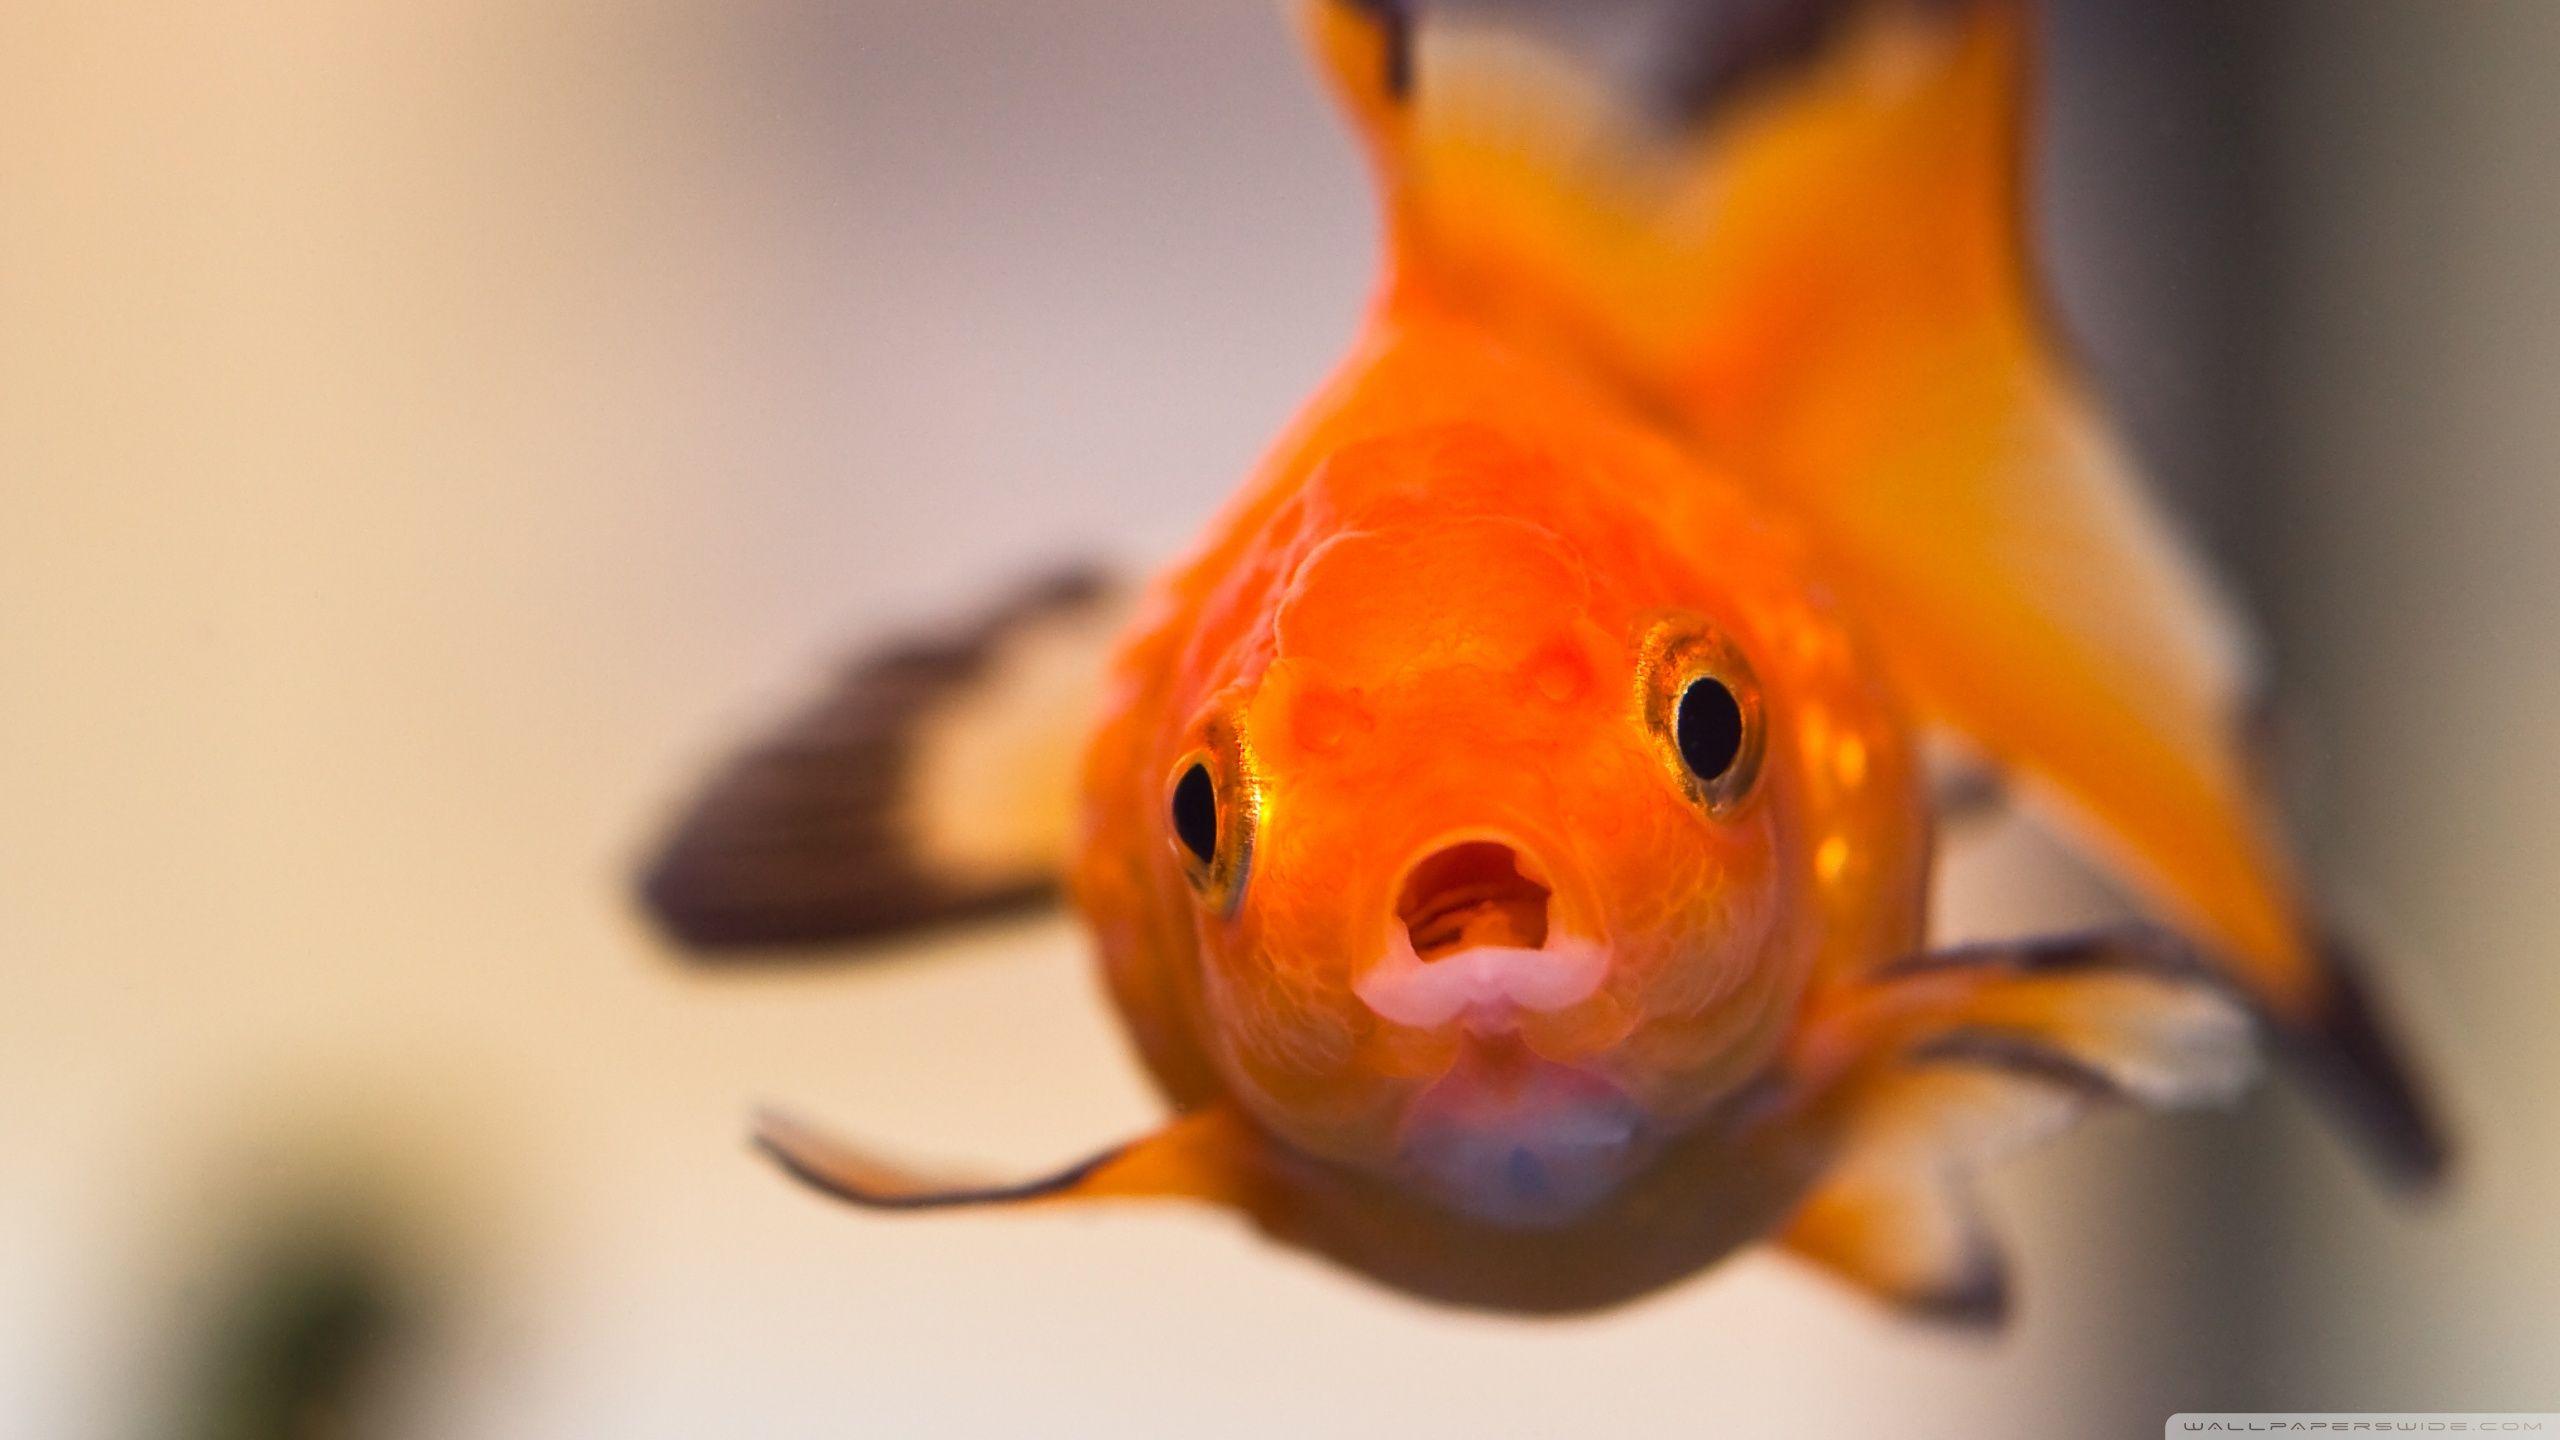 Goldfish Worried Face ❤ 4K HD Desktop Wallpaper for 4K Ultra HD TV